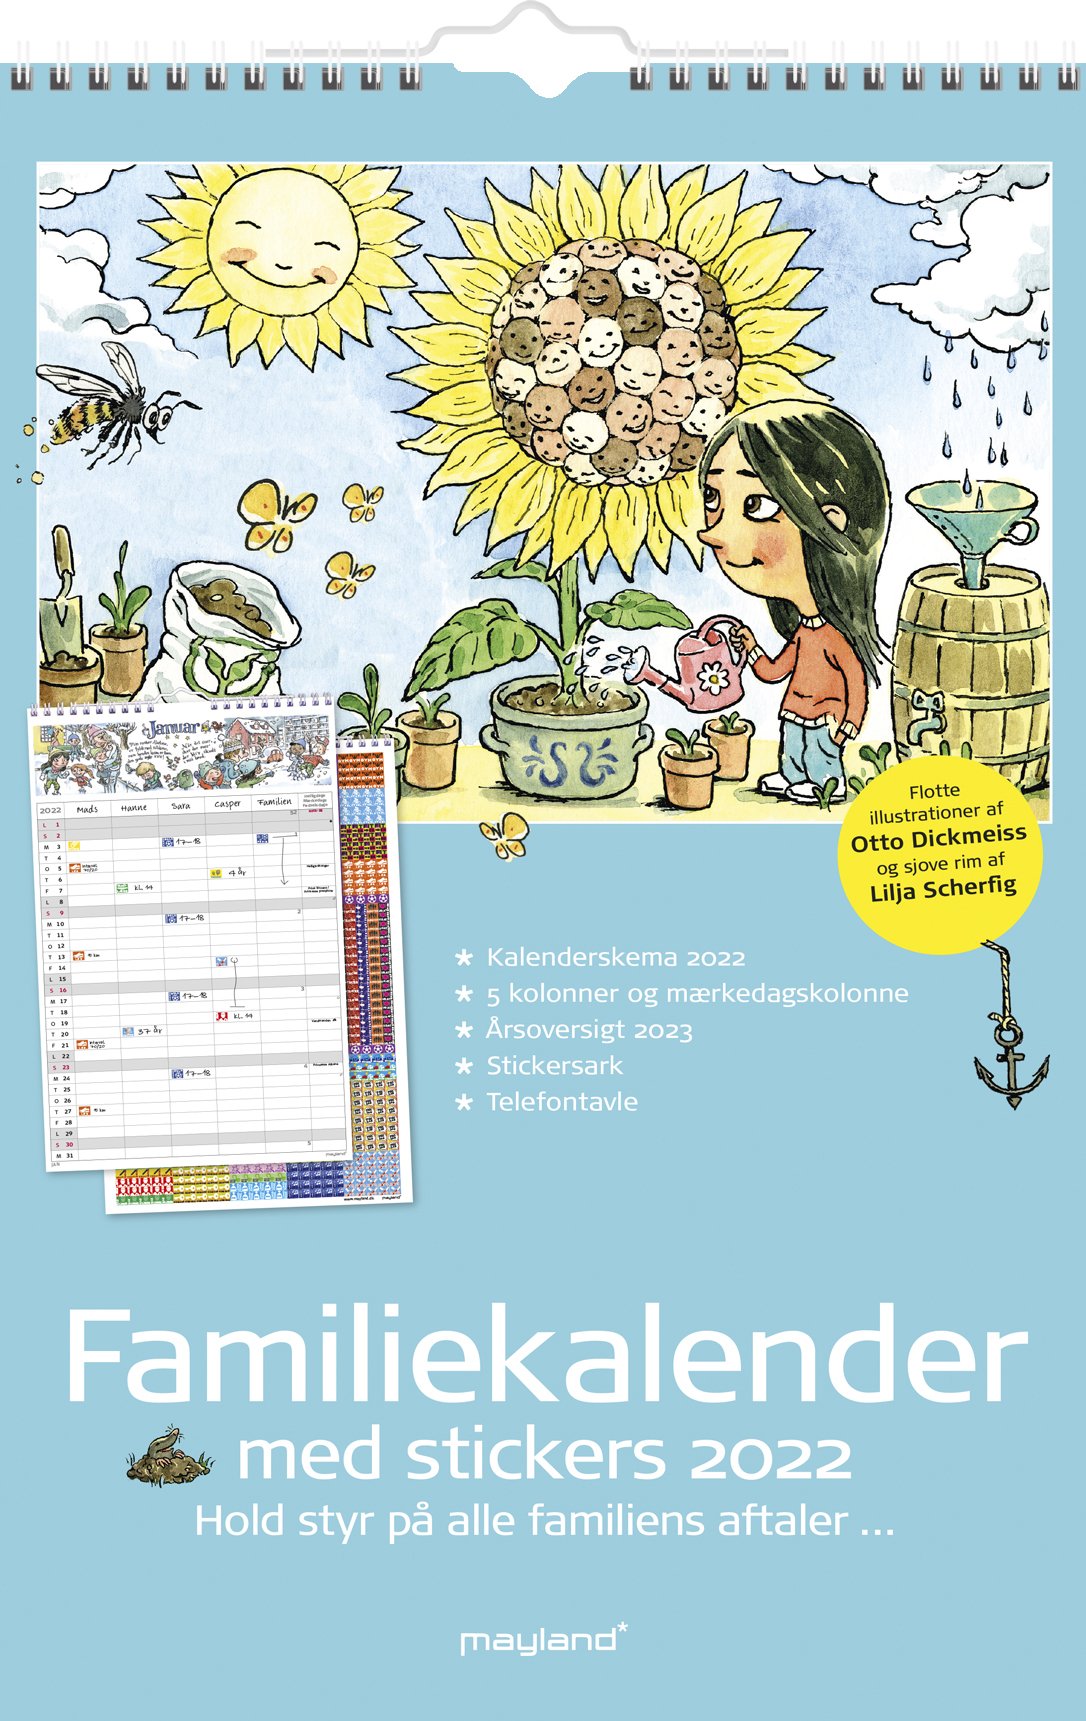 Mayland Familiekalender med stickers 2022